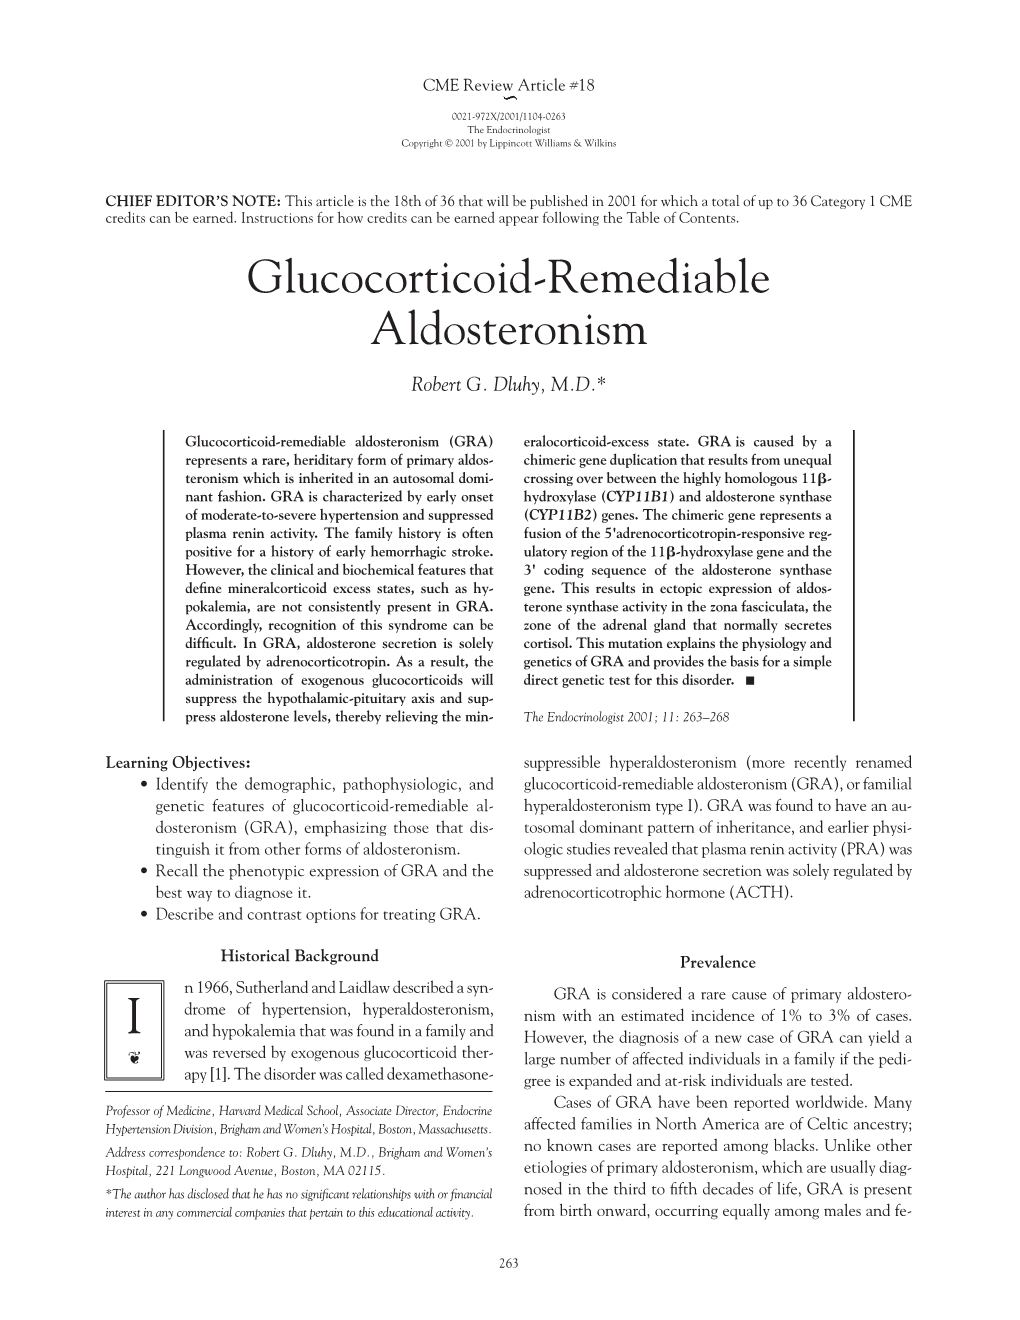 Glucocorticoid-Remediable Aldosteronism